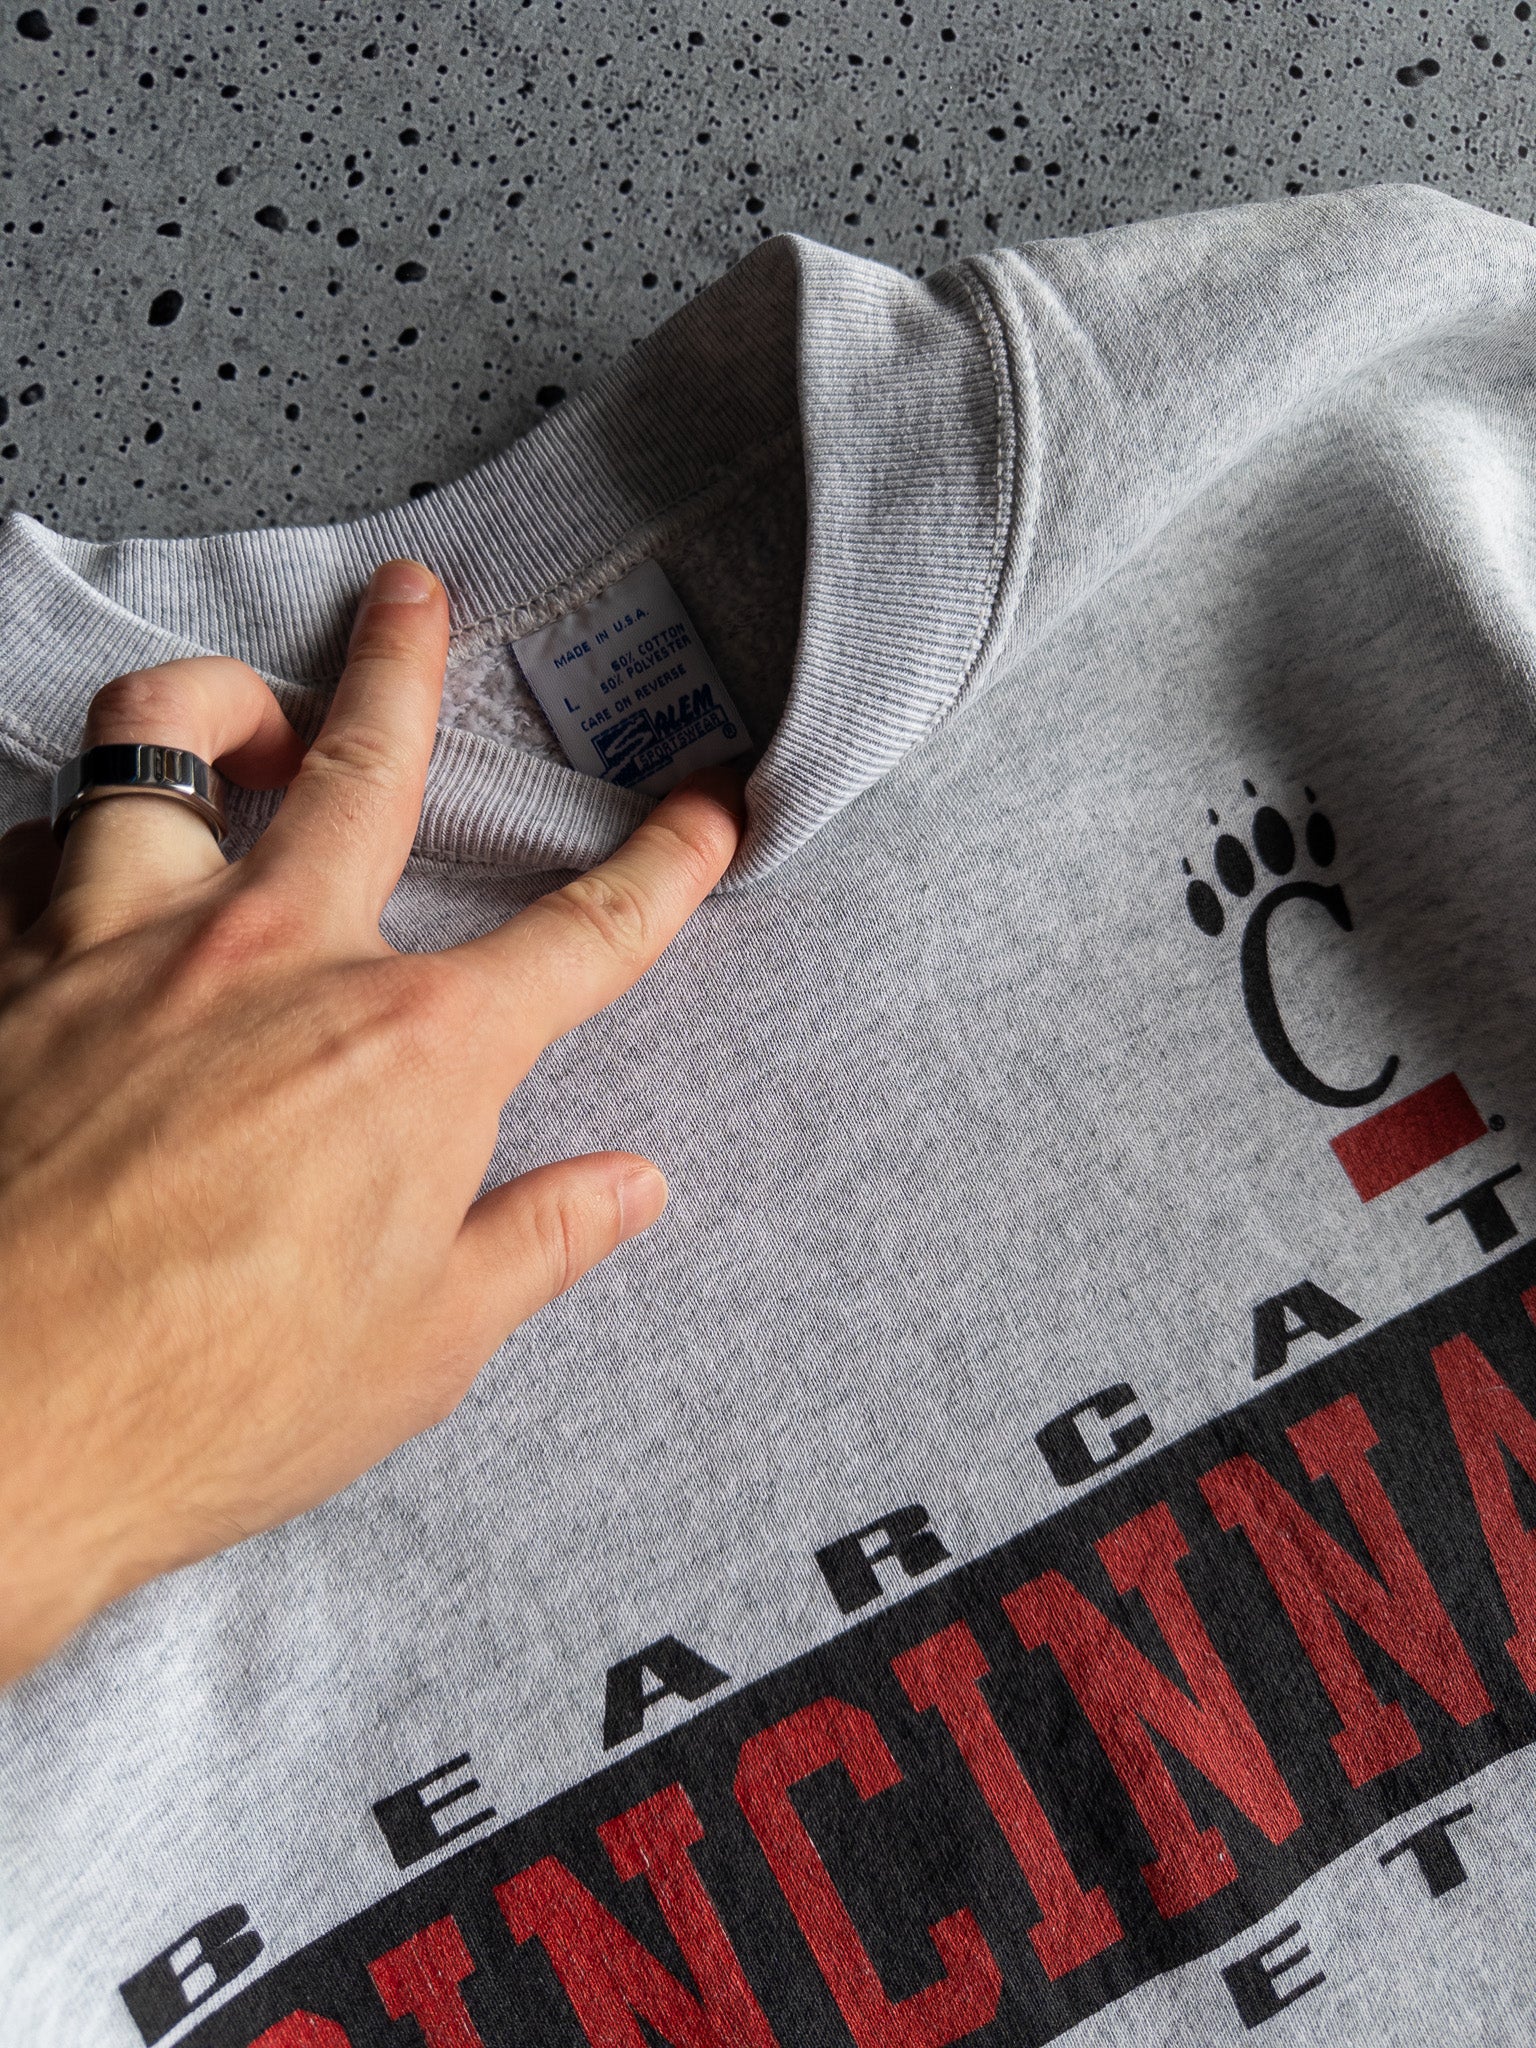 Vintage Cincinnati Bearcats Sweatshirt (L)